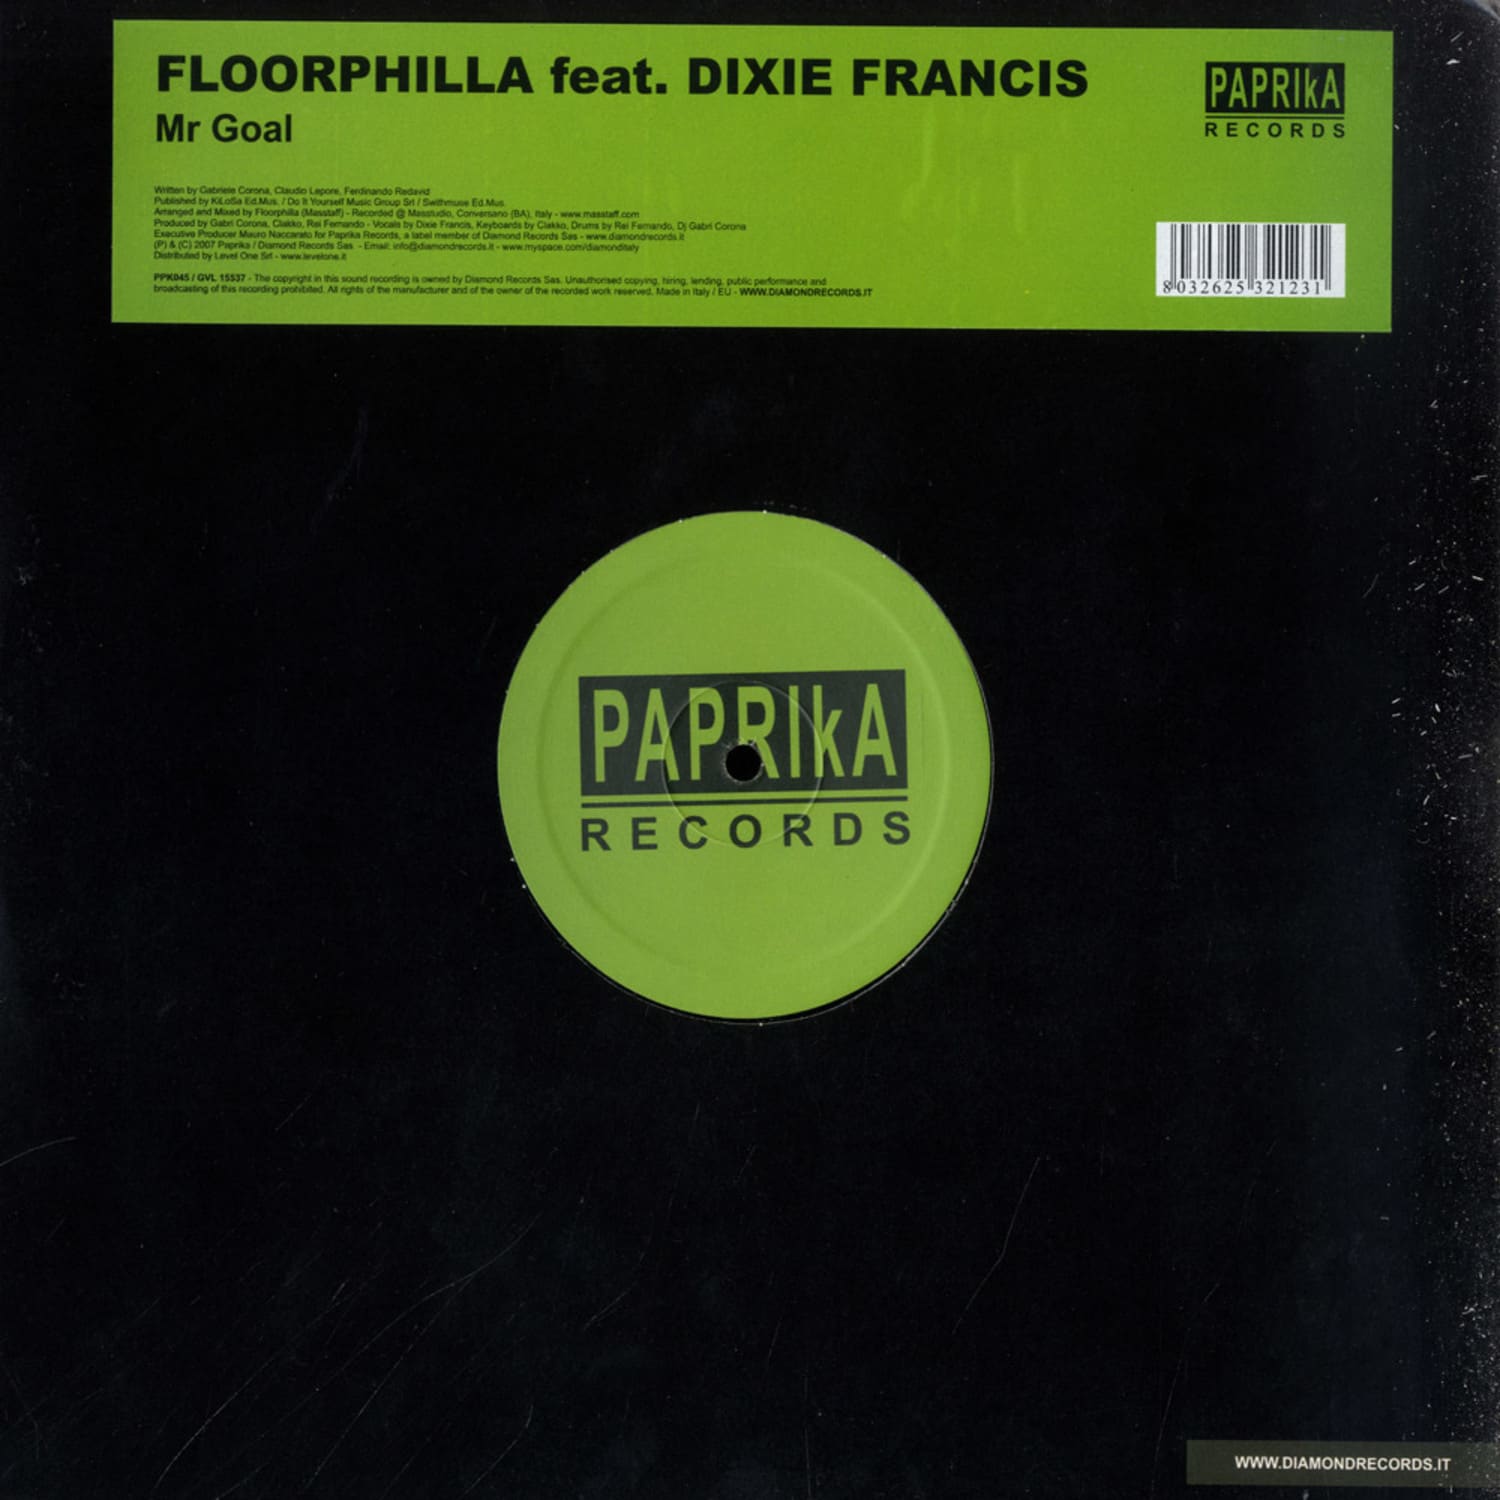 Floorphilla Feat. Dixie Francis - MR. GOAL